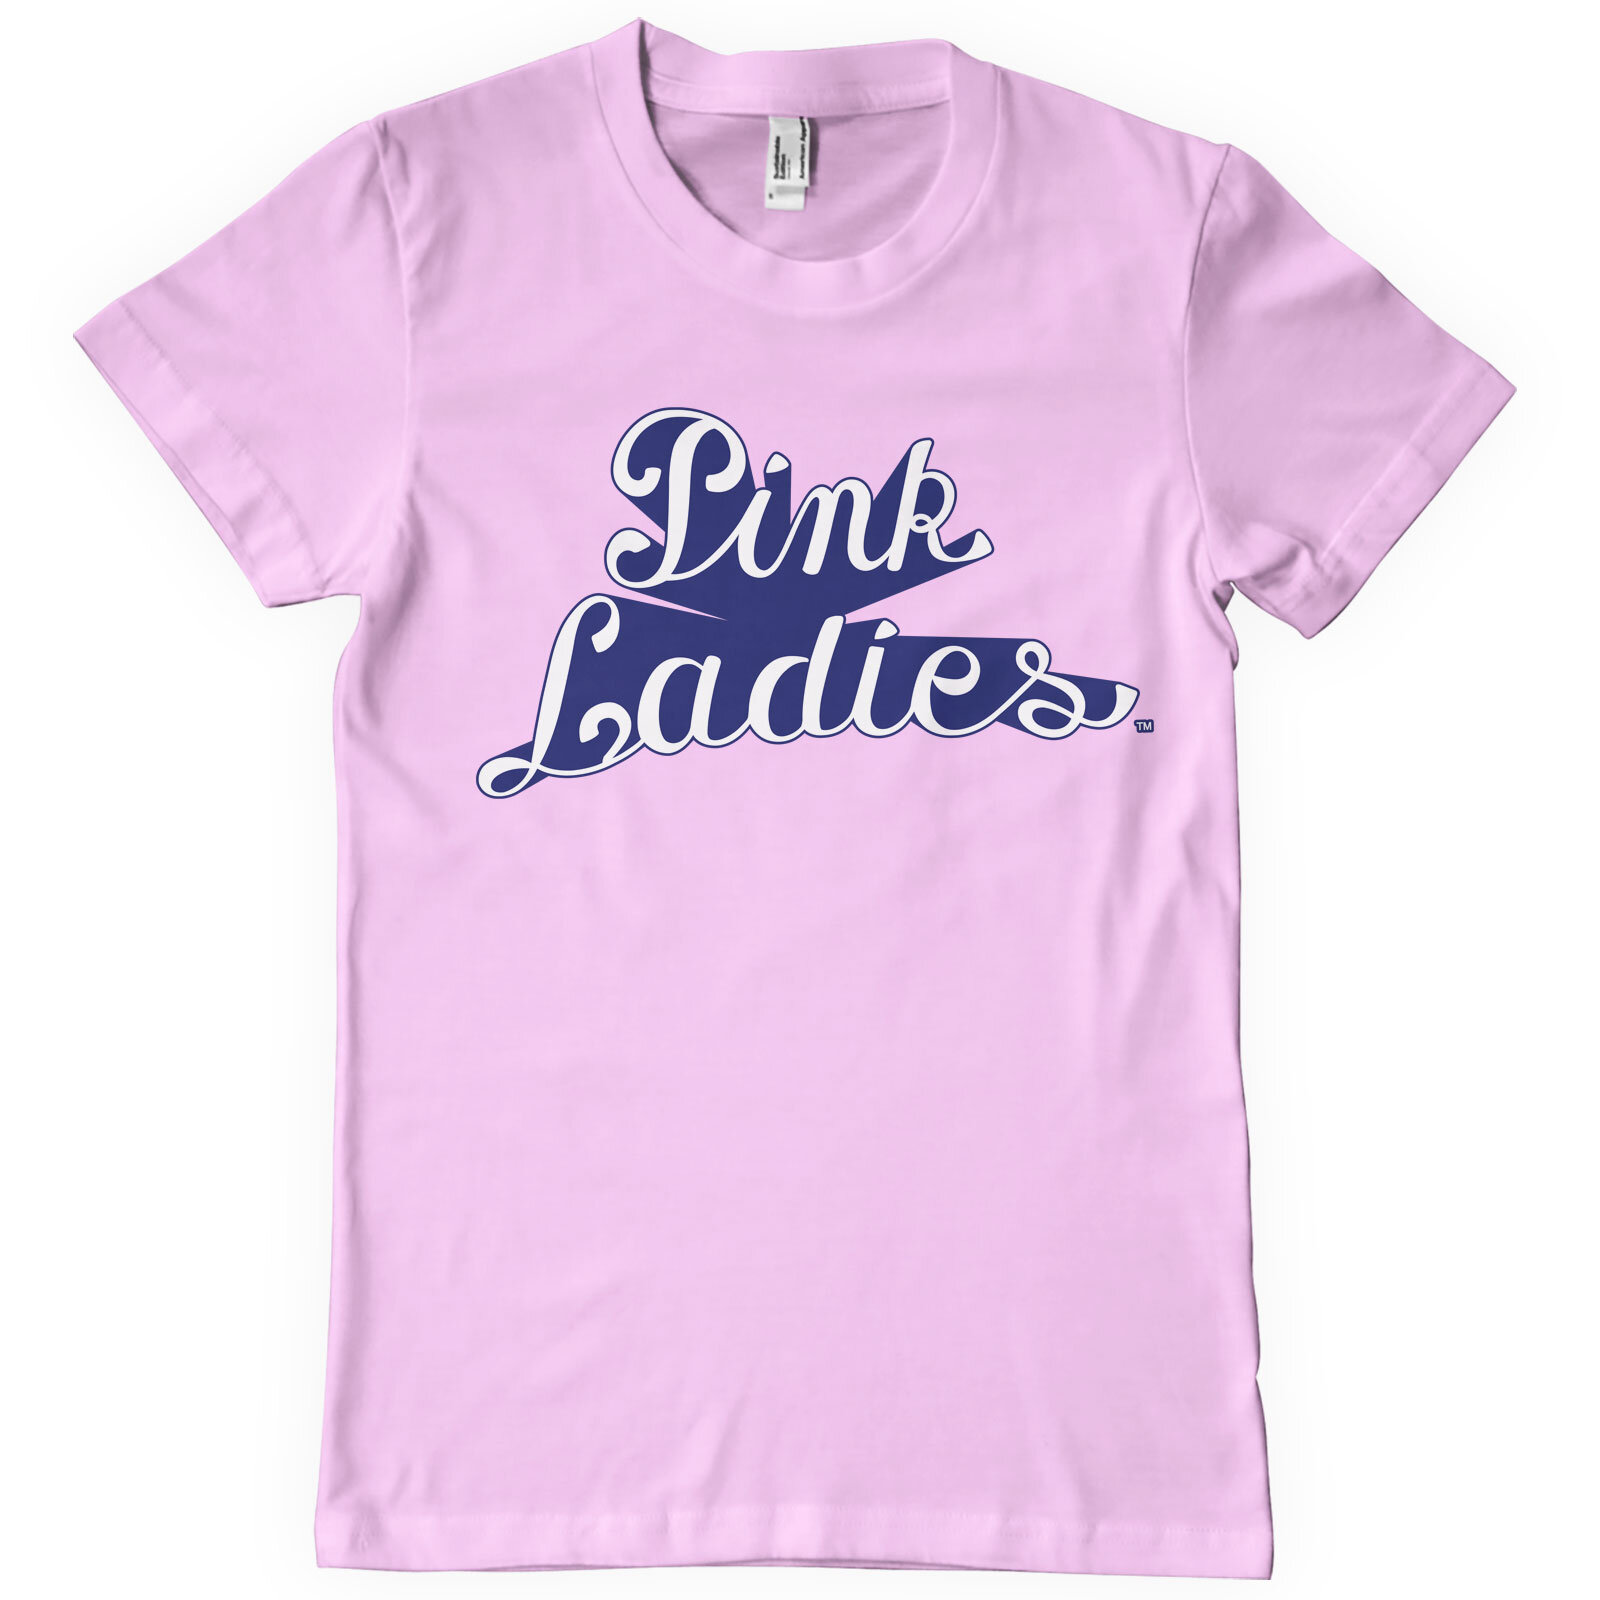 Grease - Pink Ladies T-Shirt